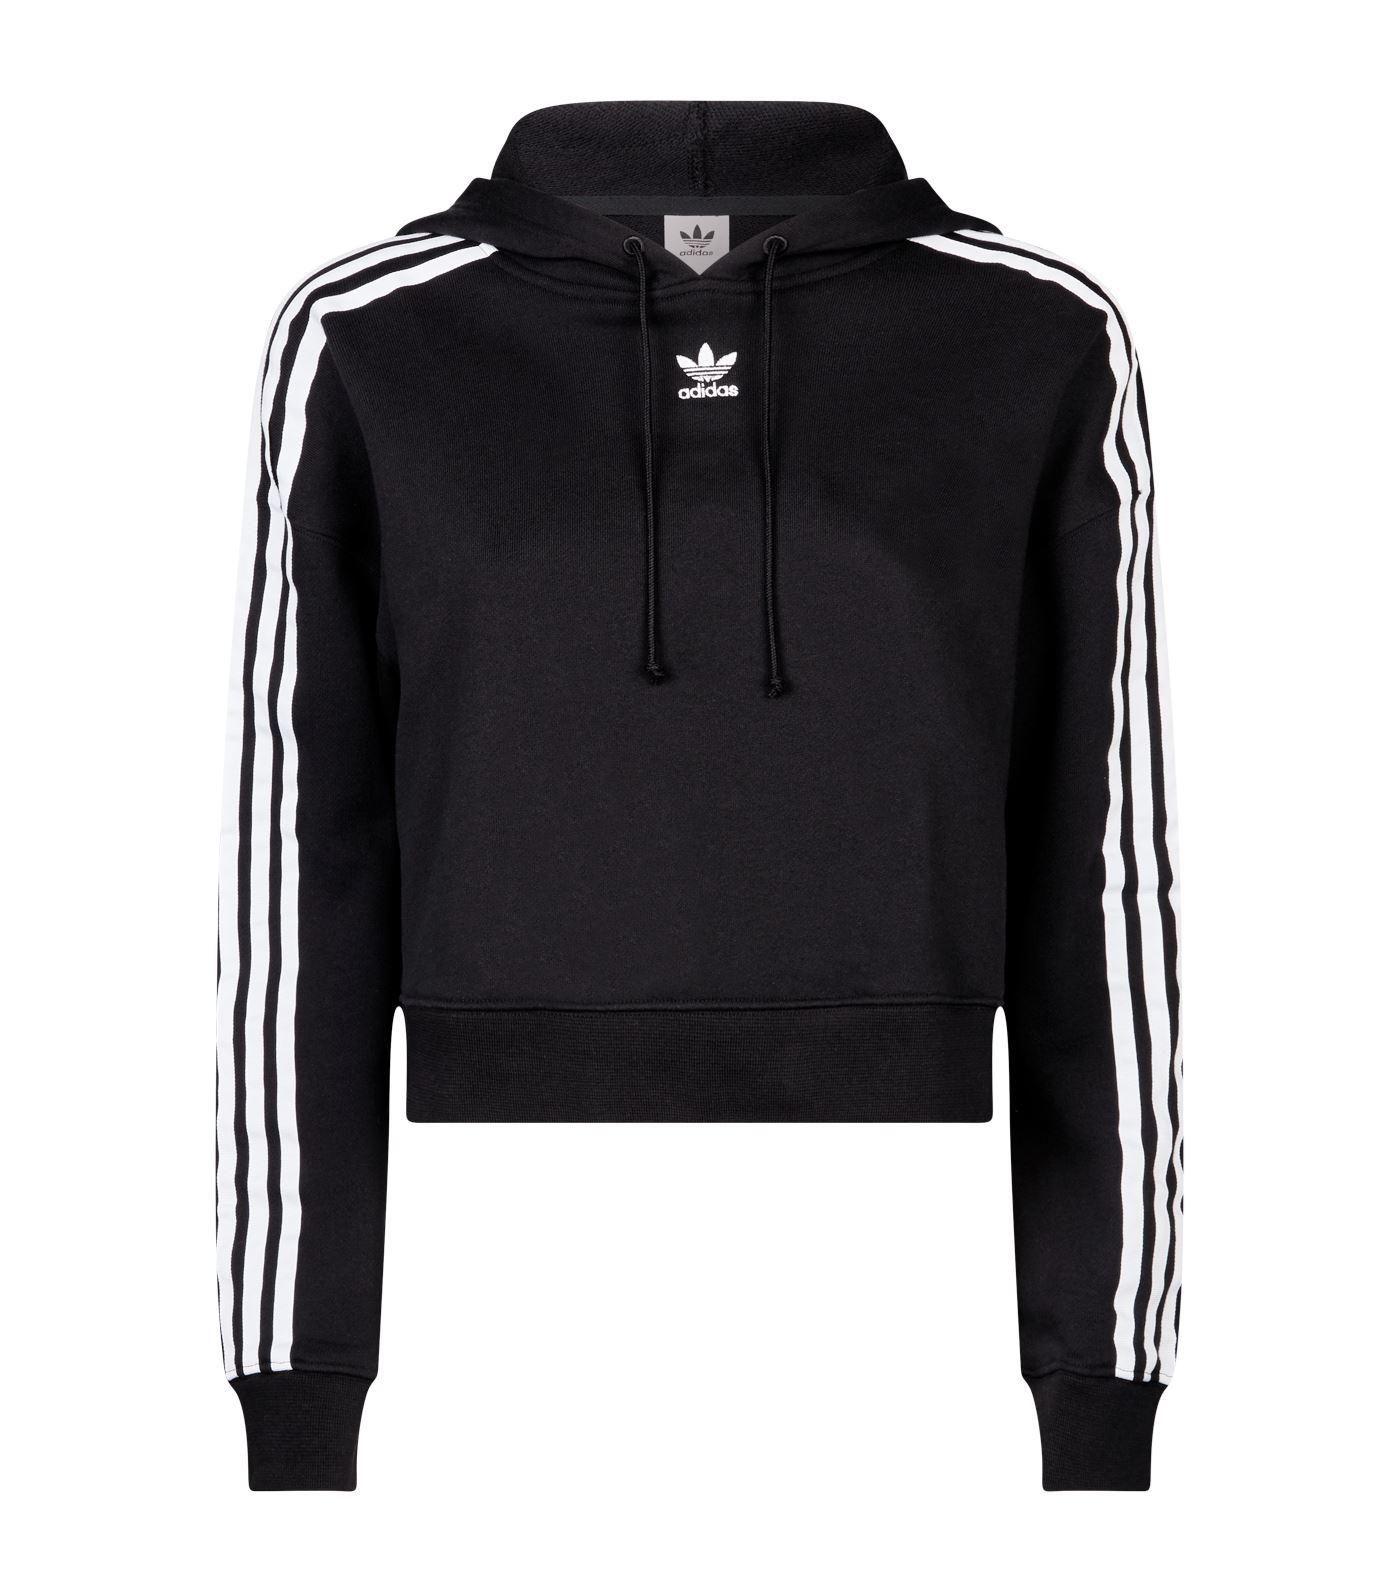 Lyst - Adidas Originals Cropped 3-stripe Hoodie in Black - Save 21. ...